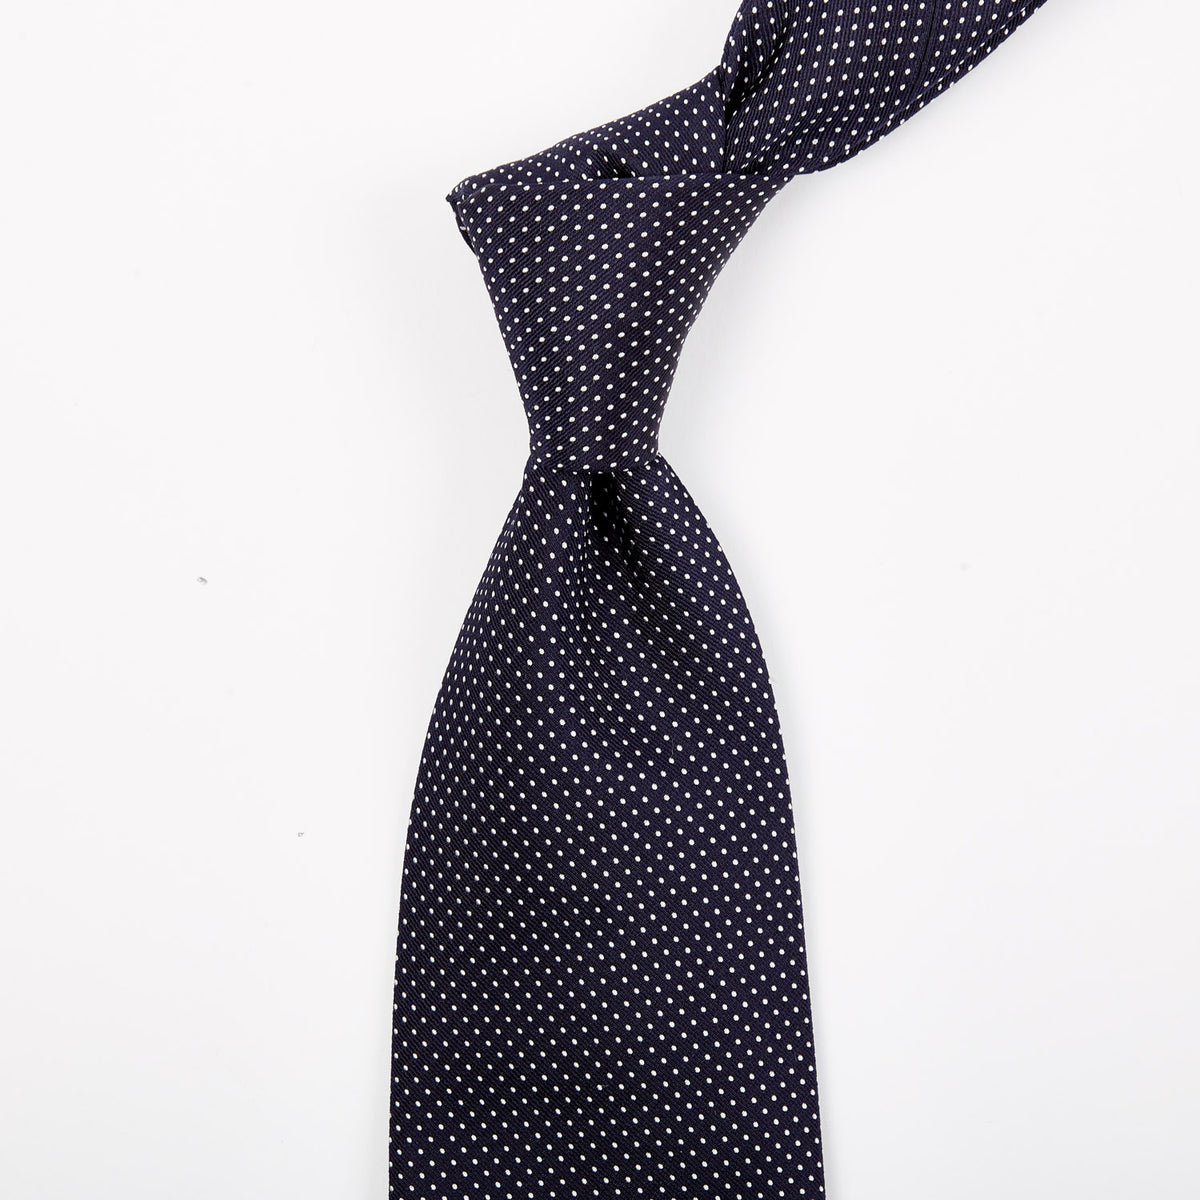 A quality handmade Sovereign Grade Navy Silk Micro Dot tie on a white background by KirbyAllison.com.